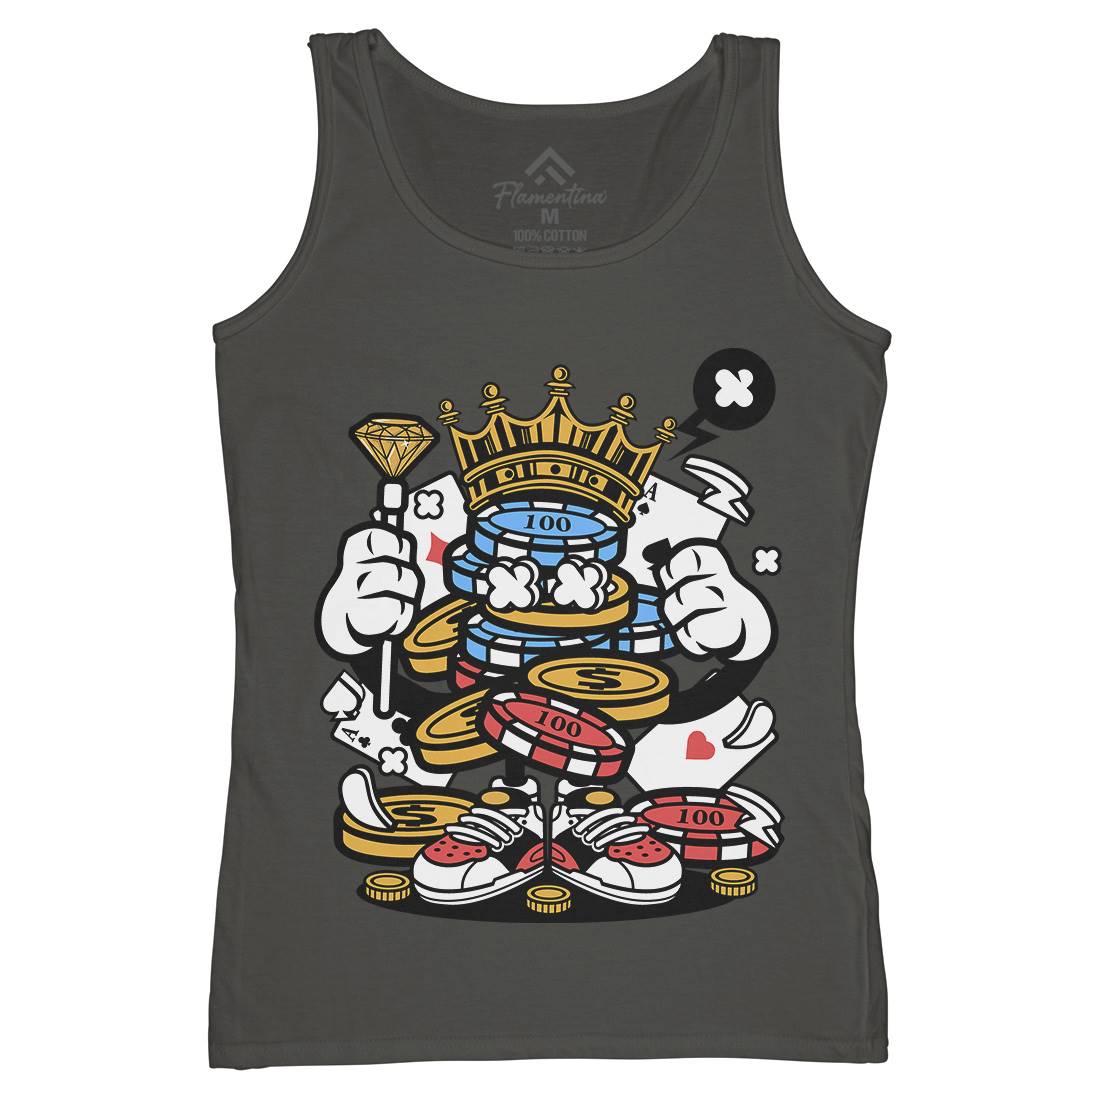 King Of Gambler Womens Organic Tank Top Vest Retro C159